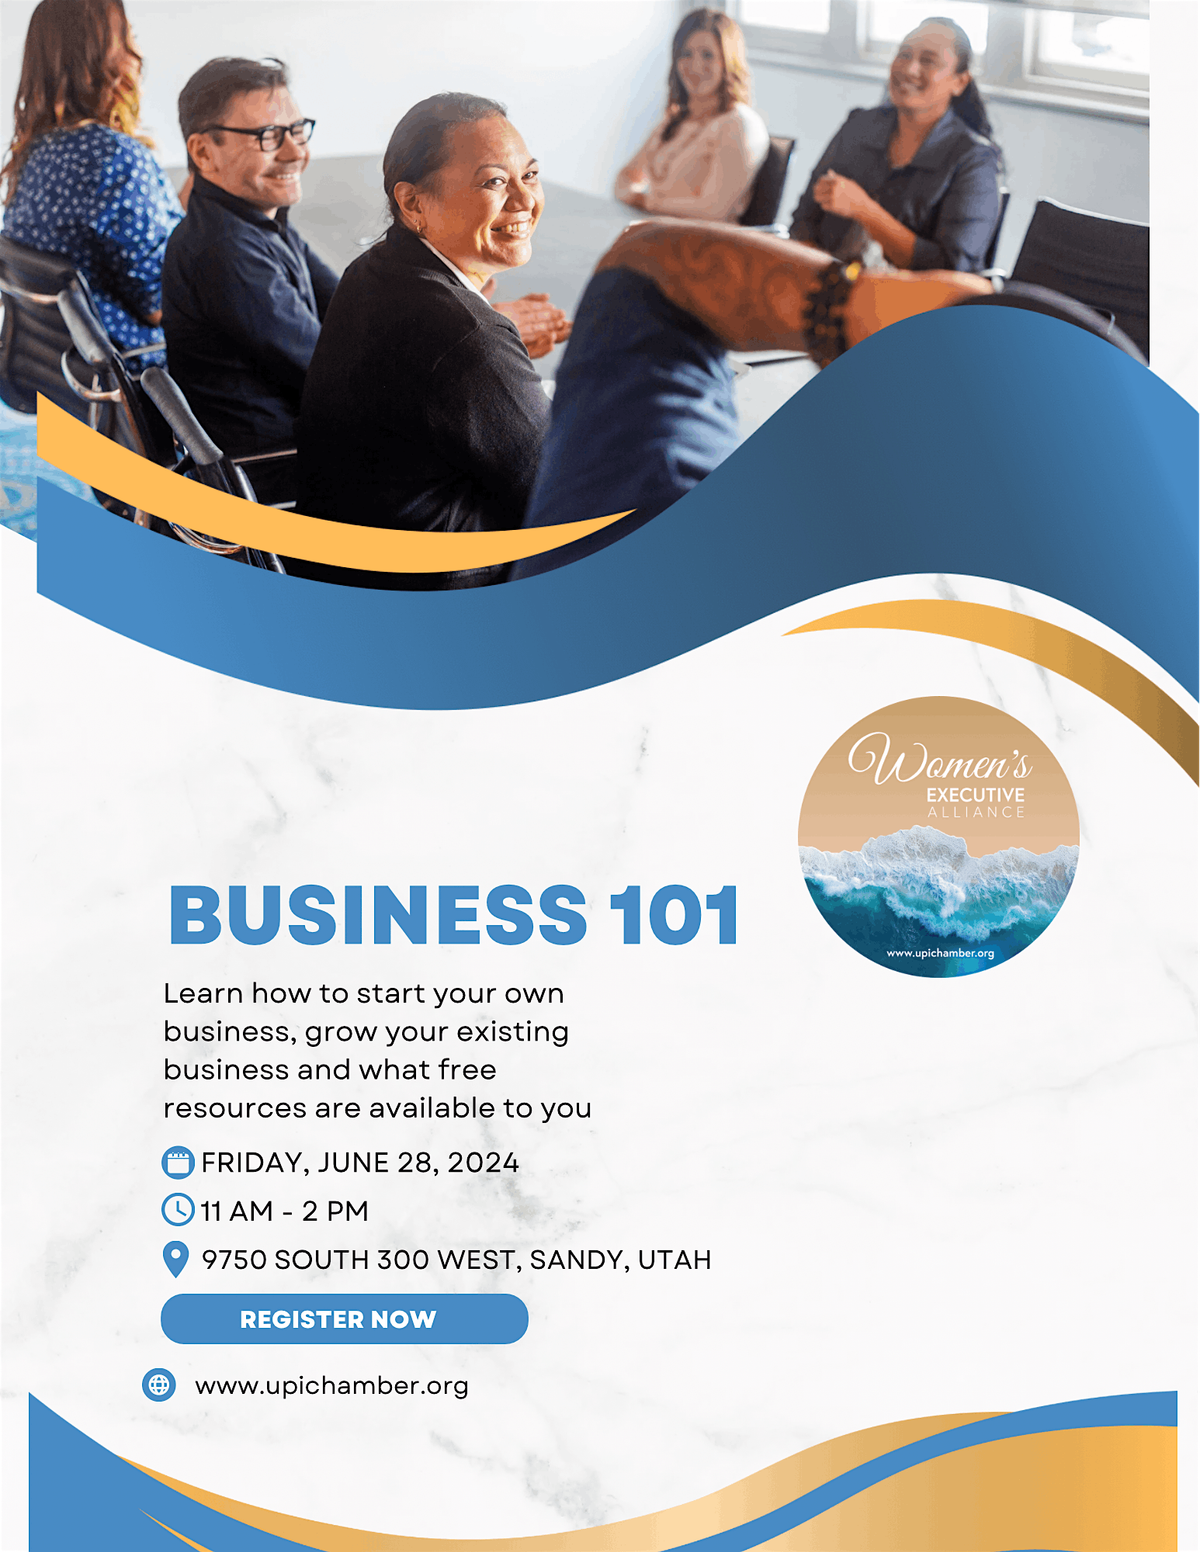 WEA's Business 101